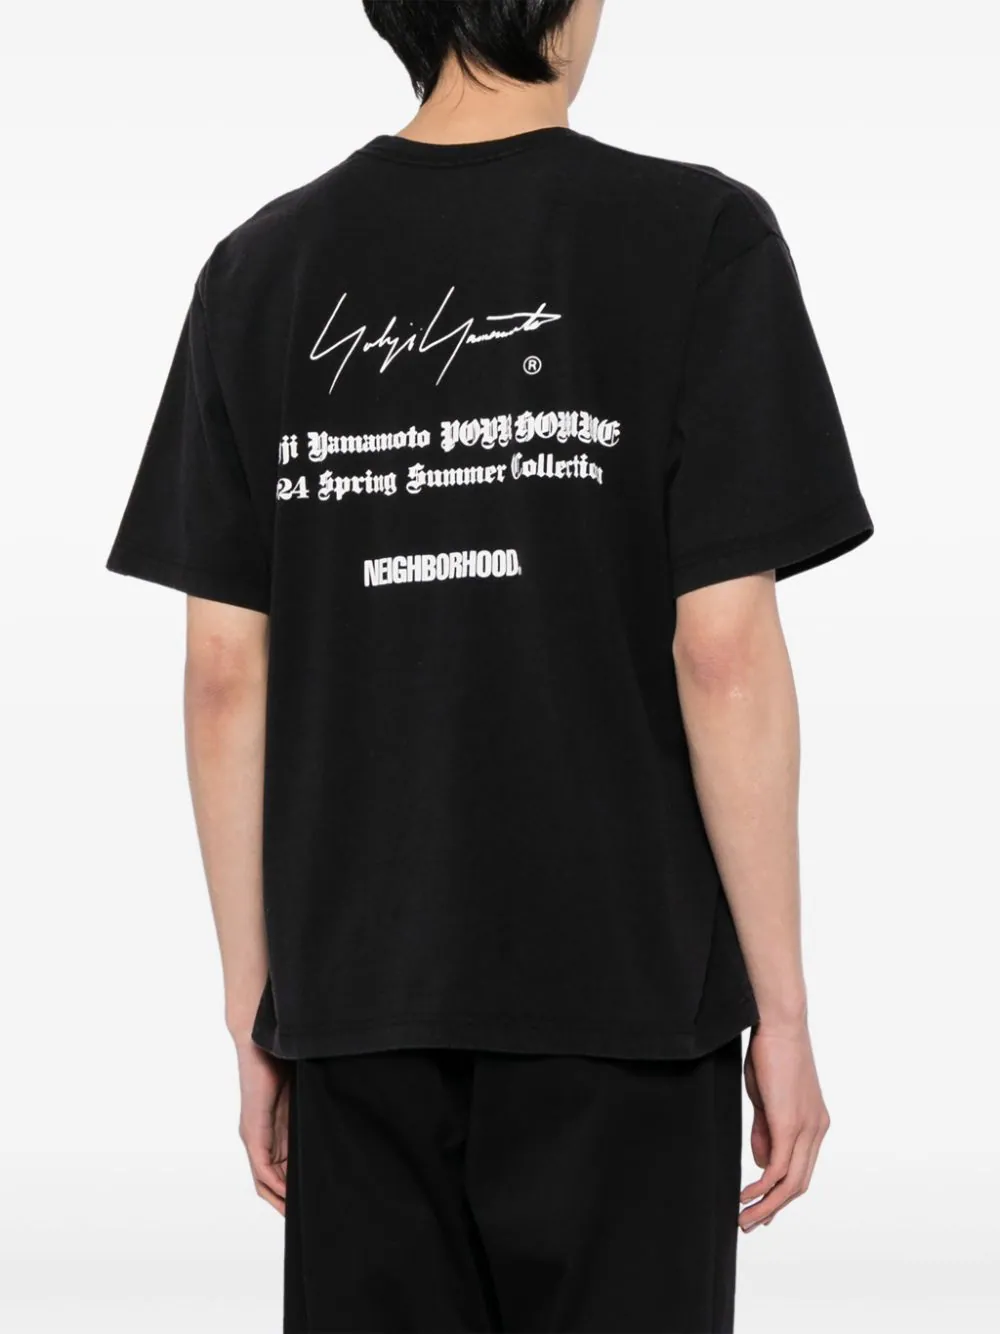 Yohji Yamamoto x NEIGHBORHOOD Cotton Jersey PT Short Sleeve Tee